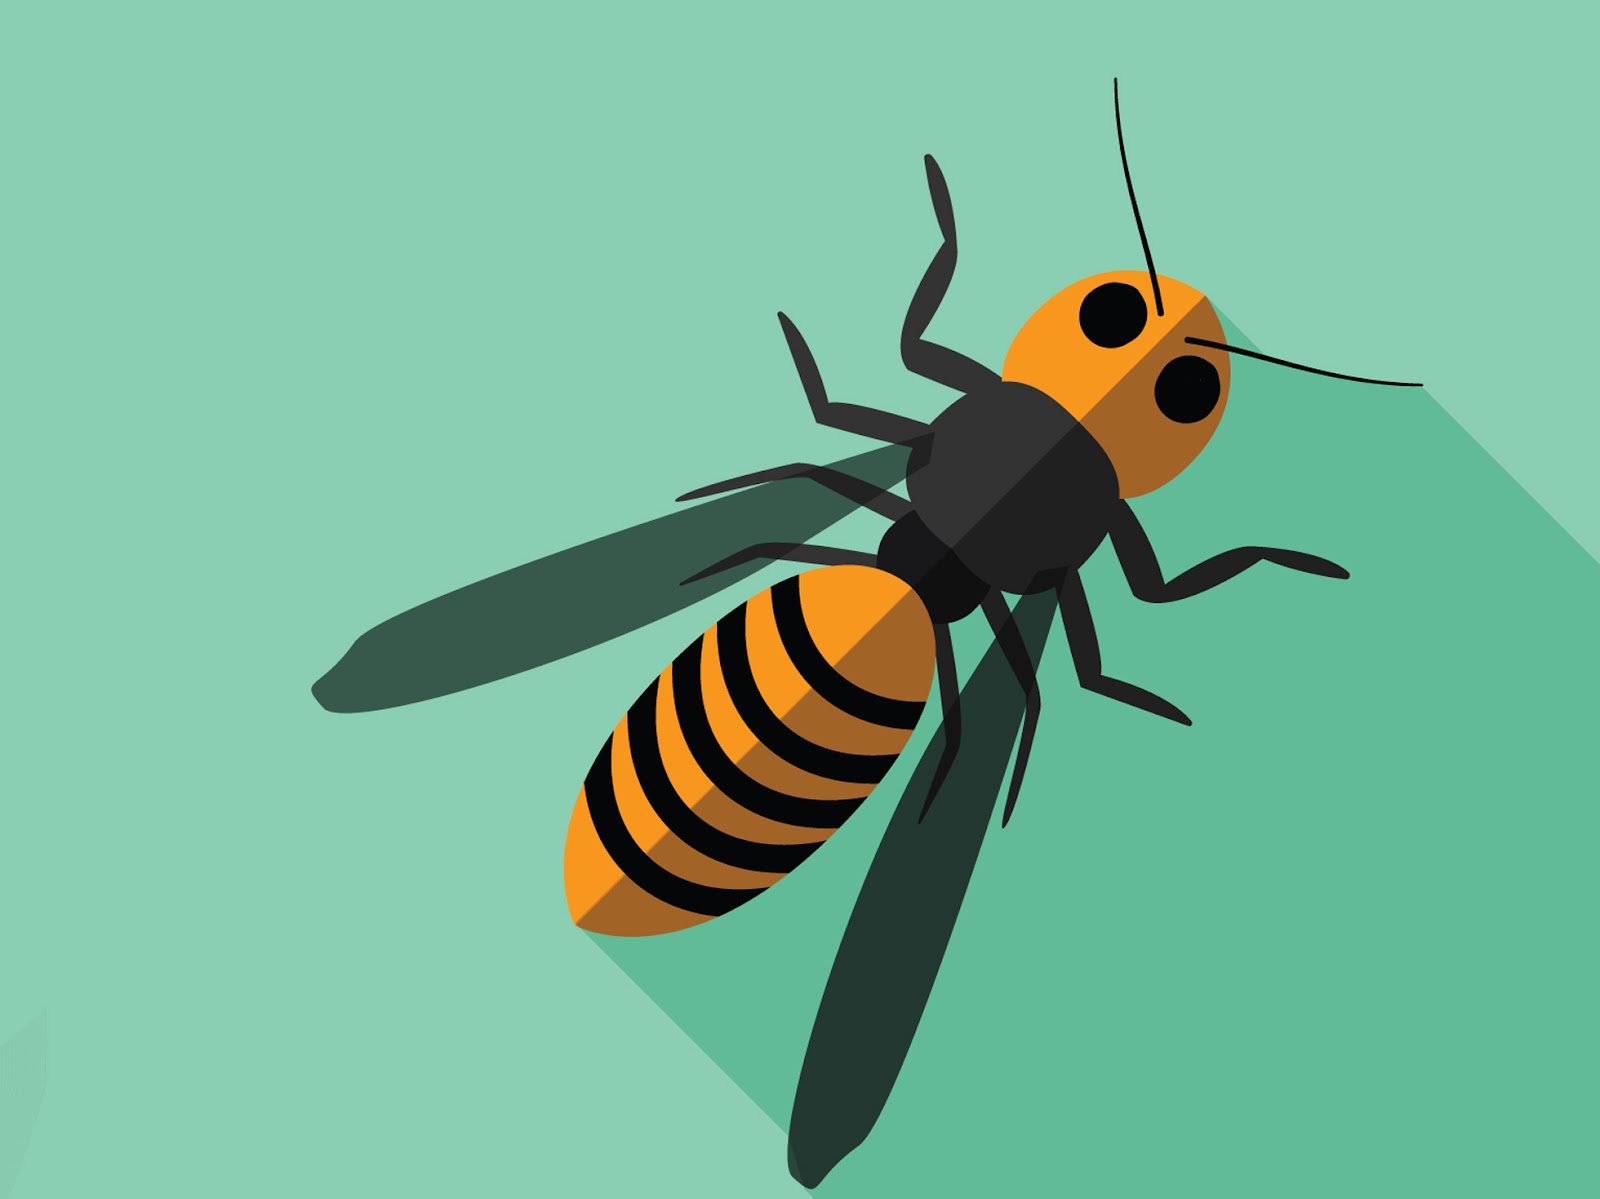 Illustration of a hornet